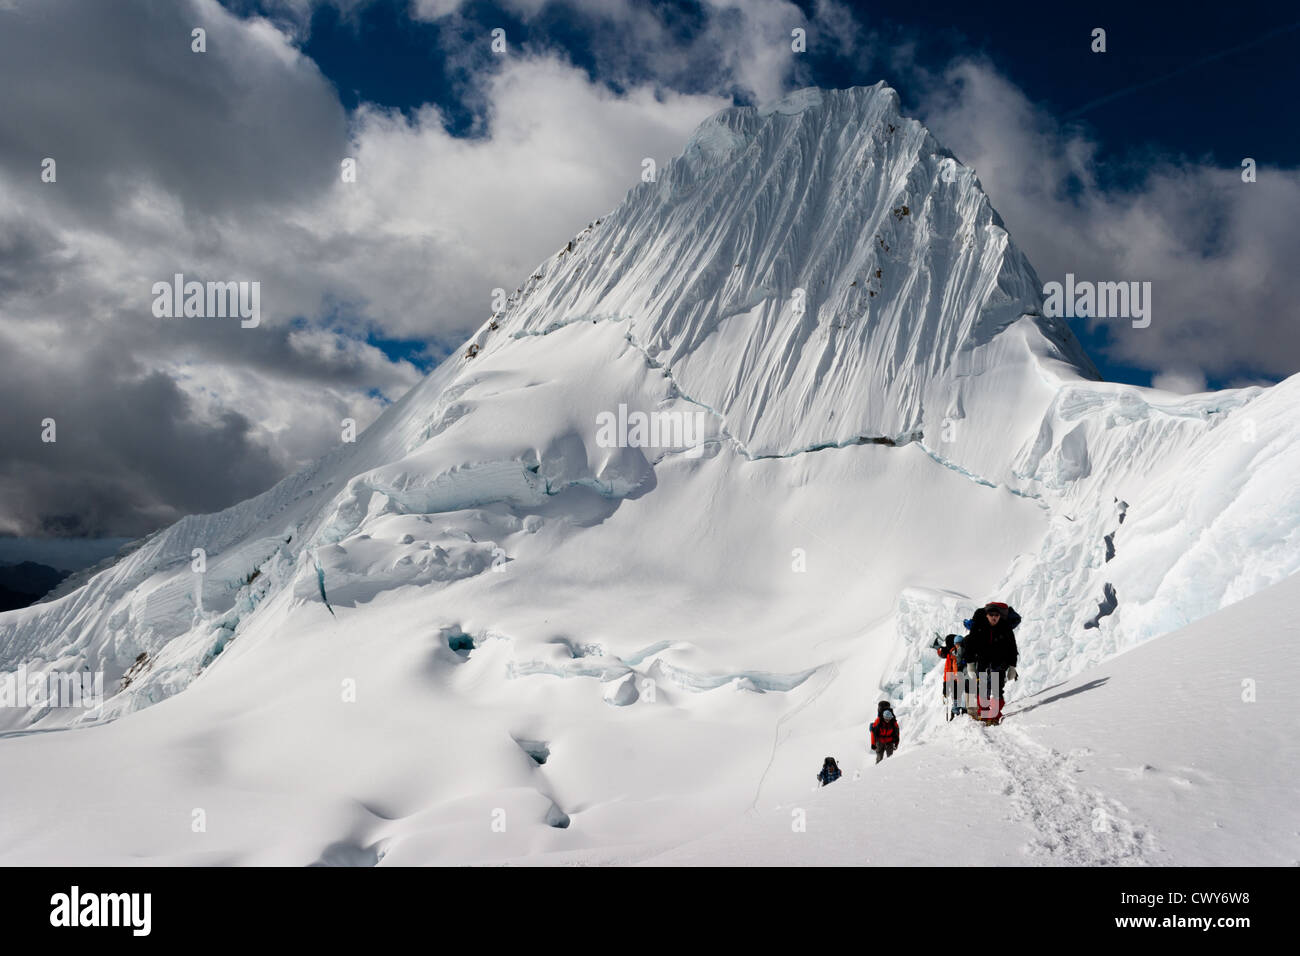 Nevado alpamayo hi-res stock photography and images - Alamy